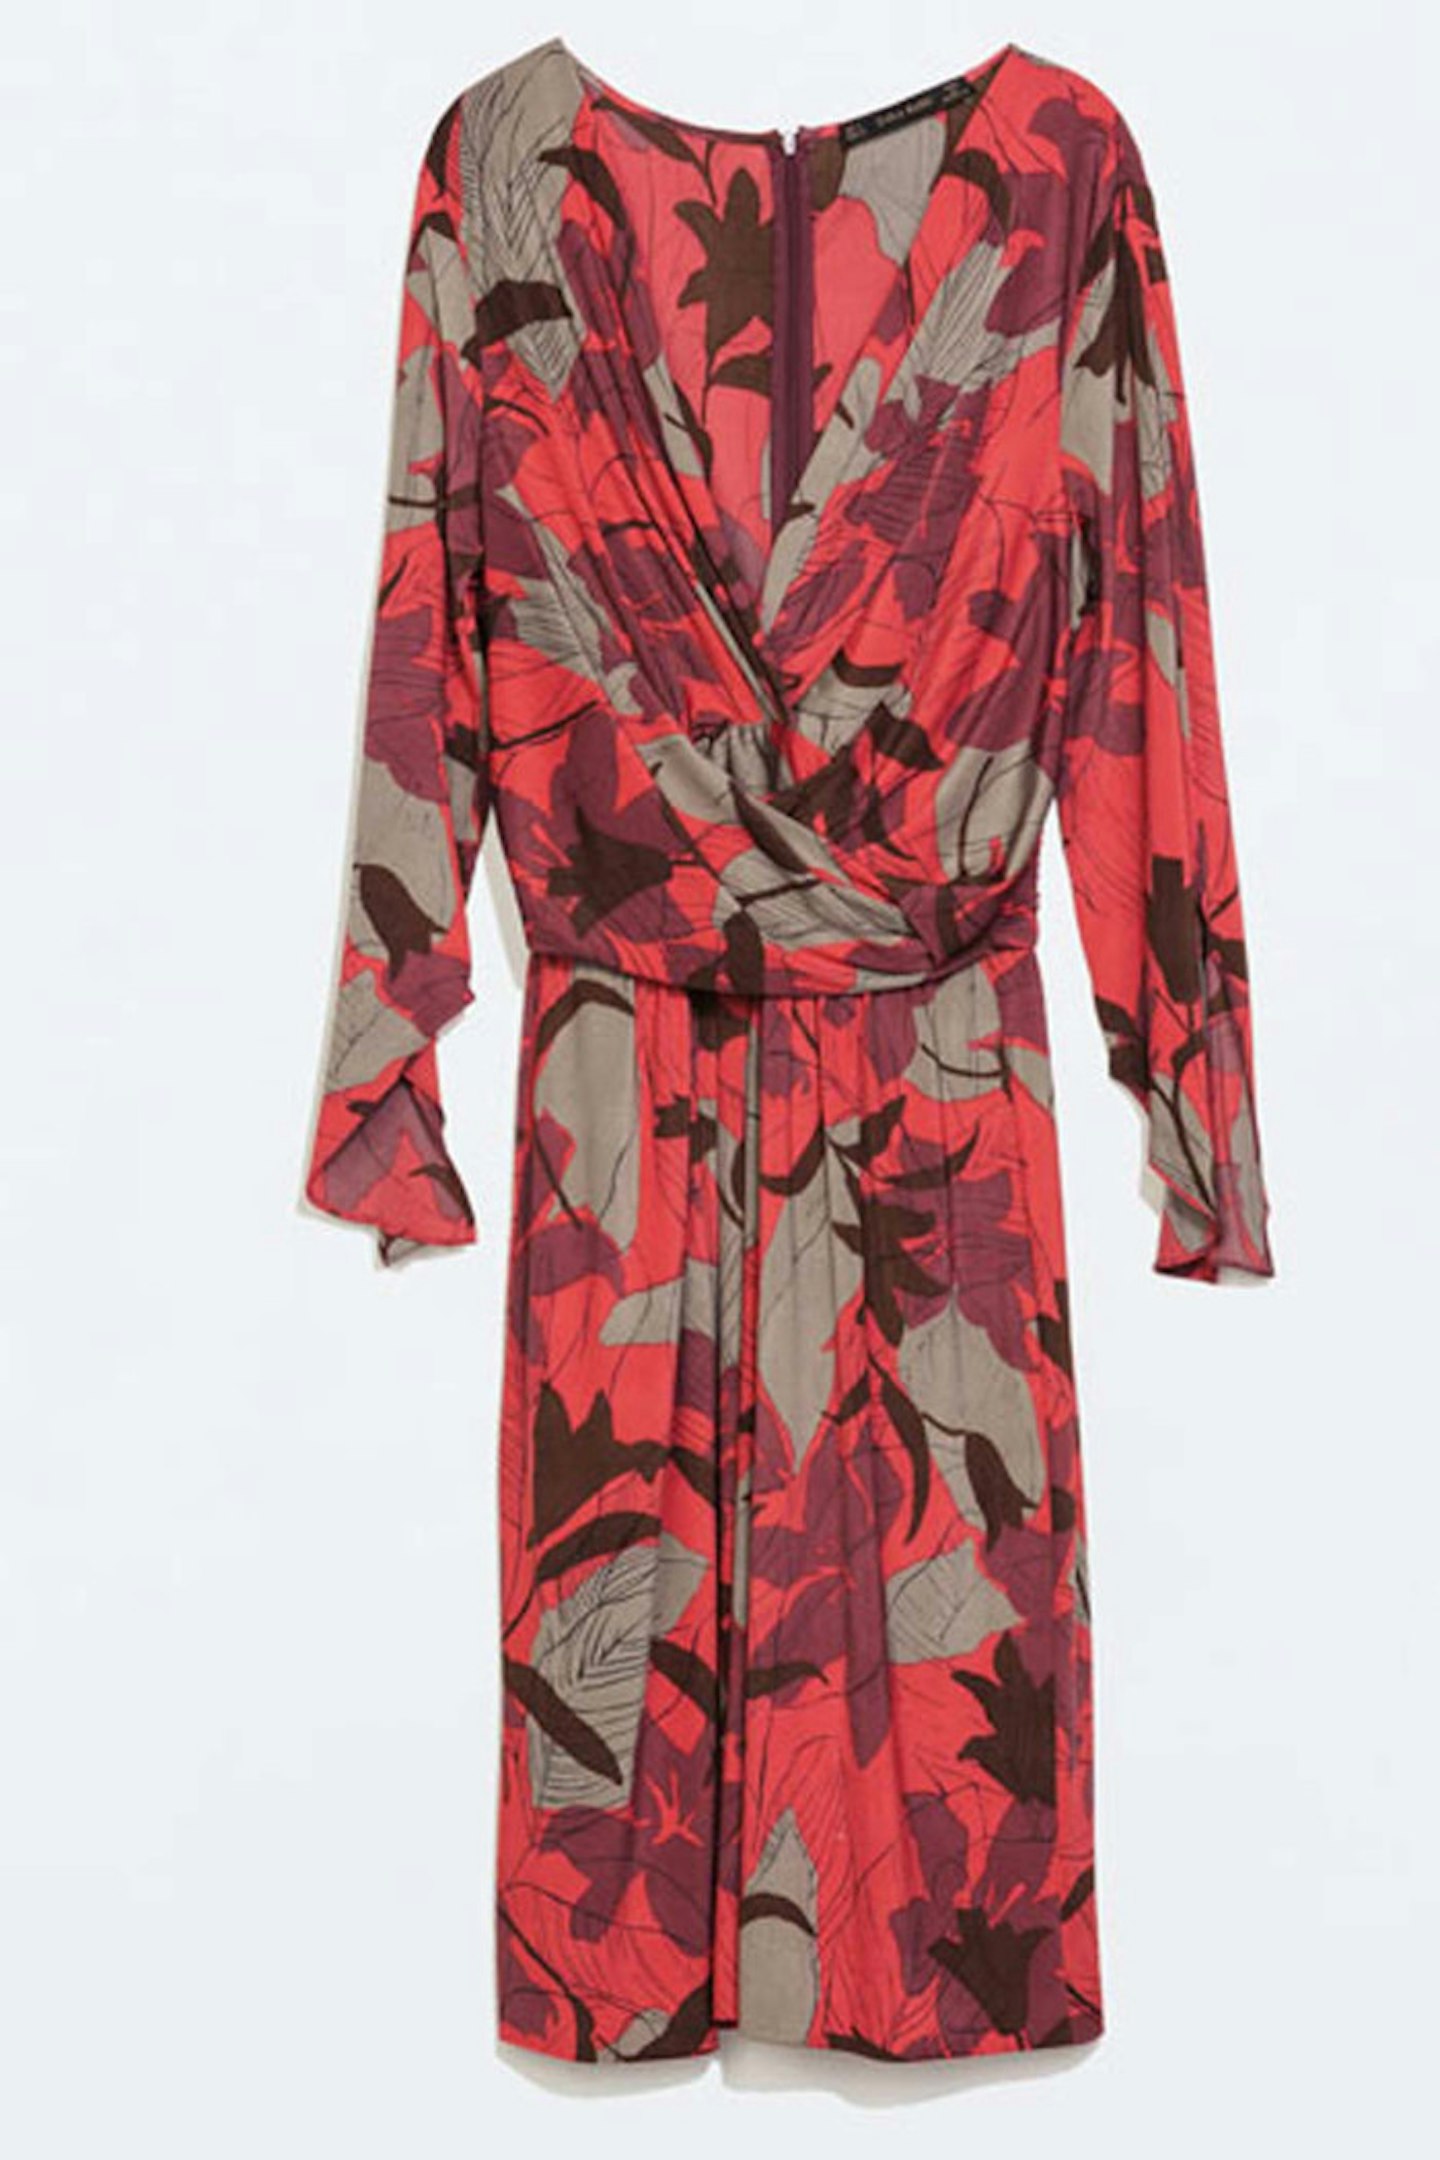 Red Floral Wrap Dress, £39.99, Zara